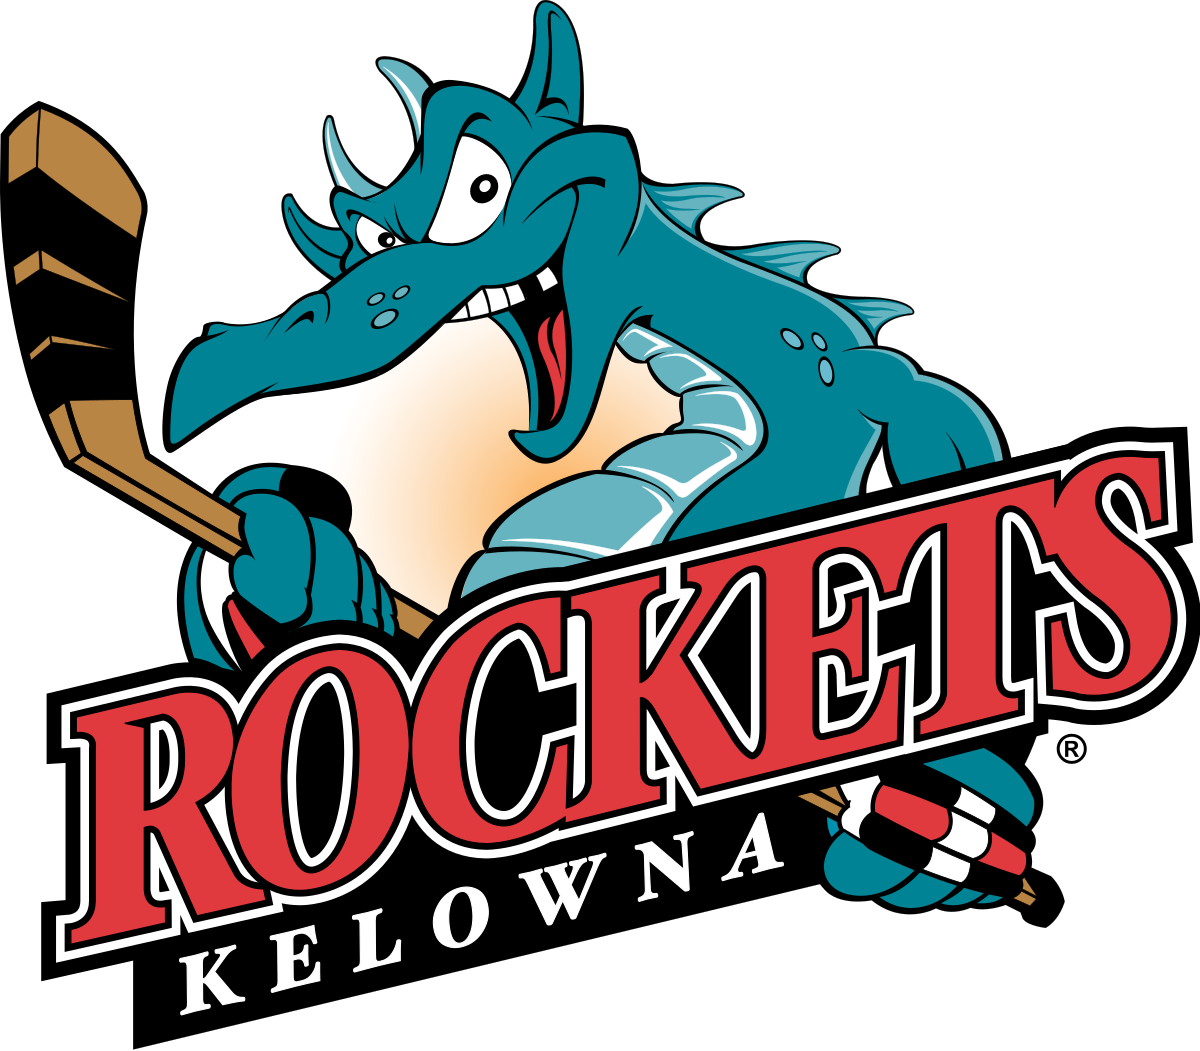 Kelowna Rockets Wall of Recognition for Outstanding Achievement - Kelowna  Rockets